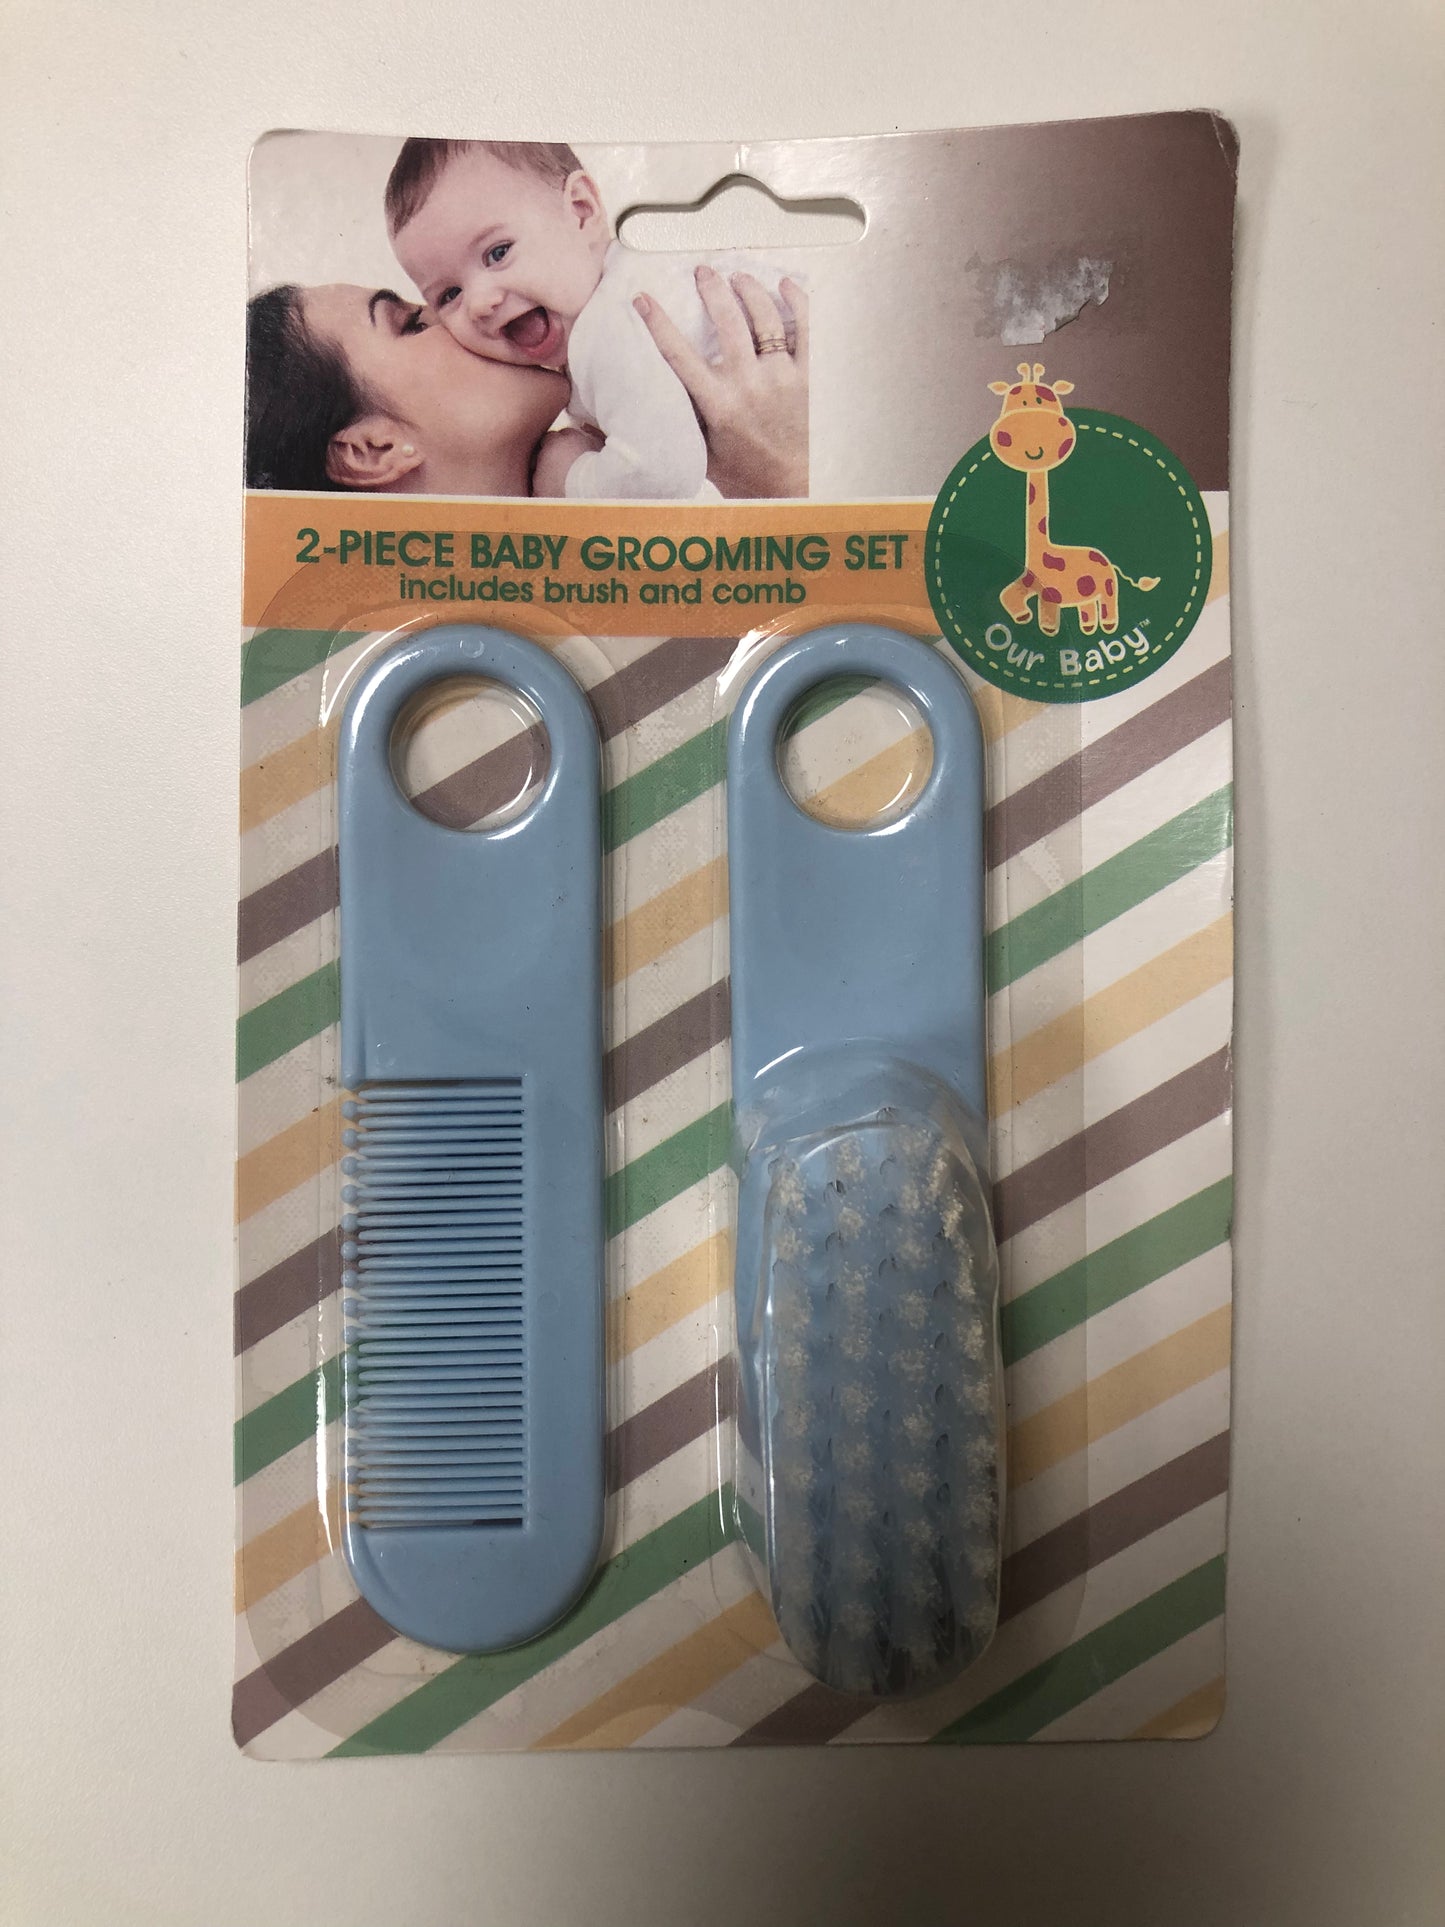 Baby grooming set 2pc